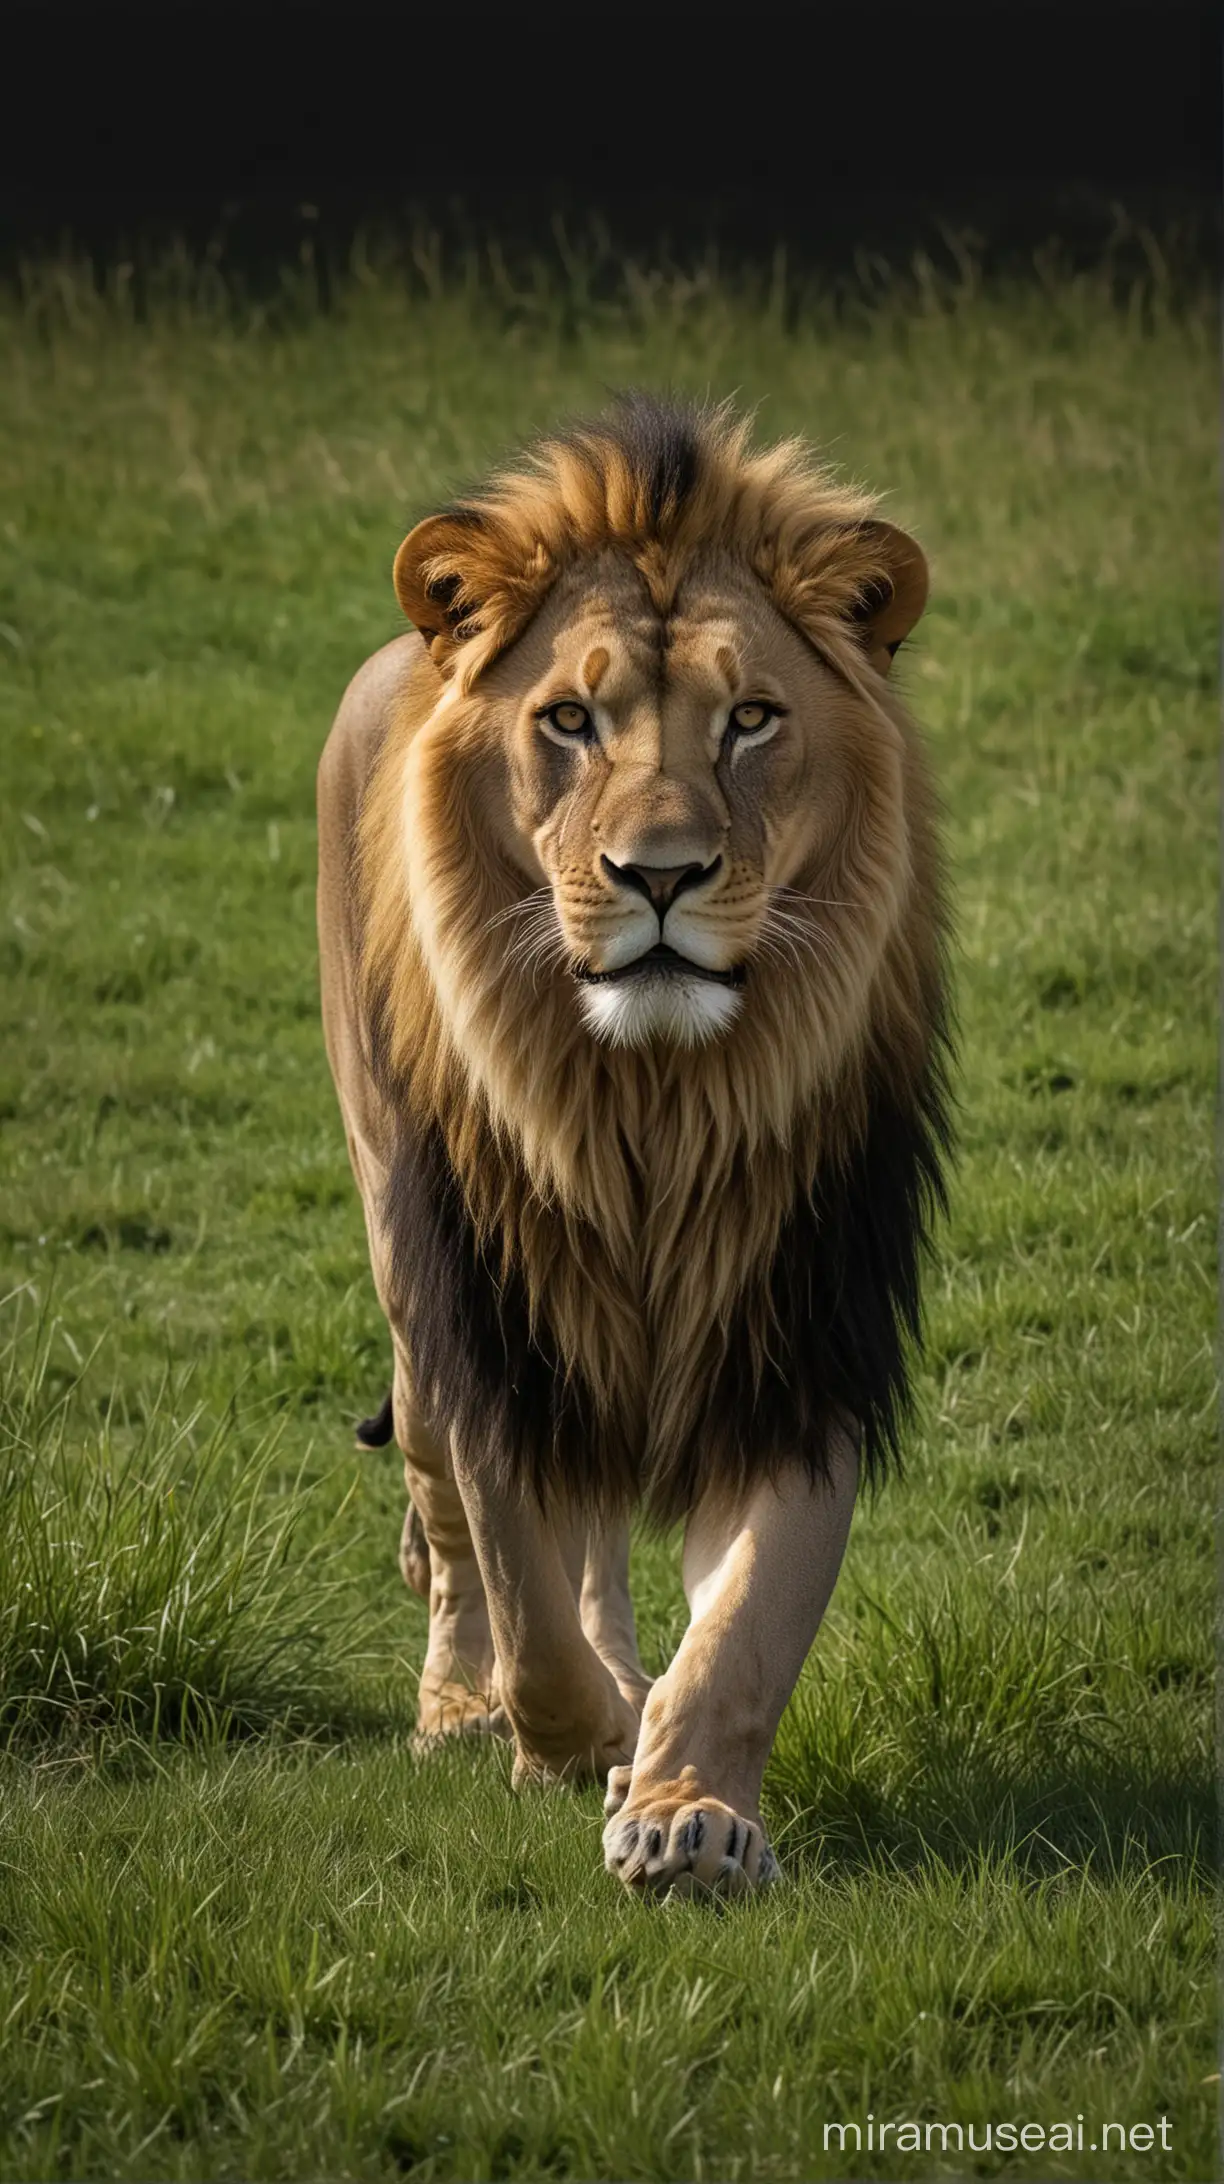 Majestic Lion Walking Through Tall Grass Against Dark Background